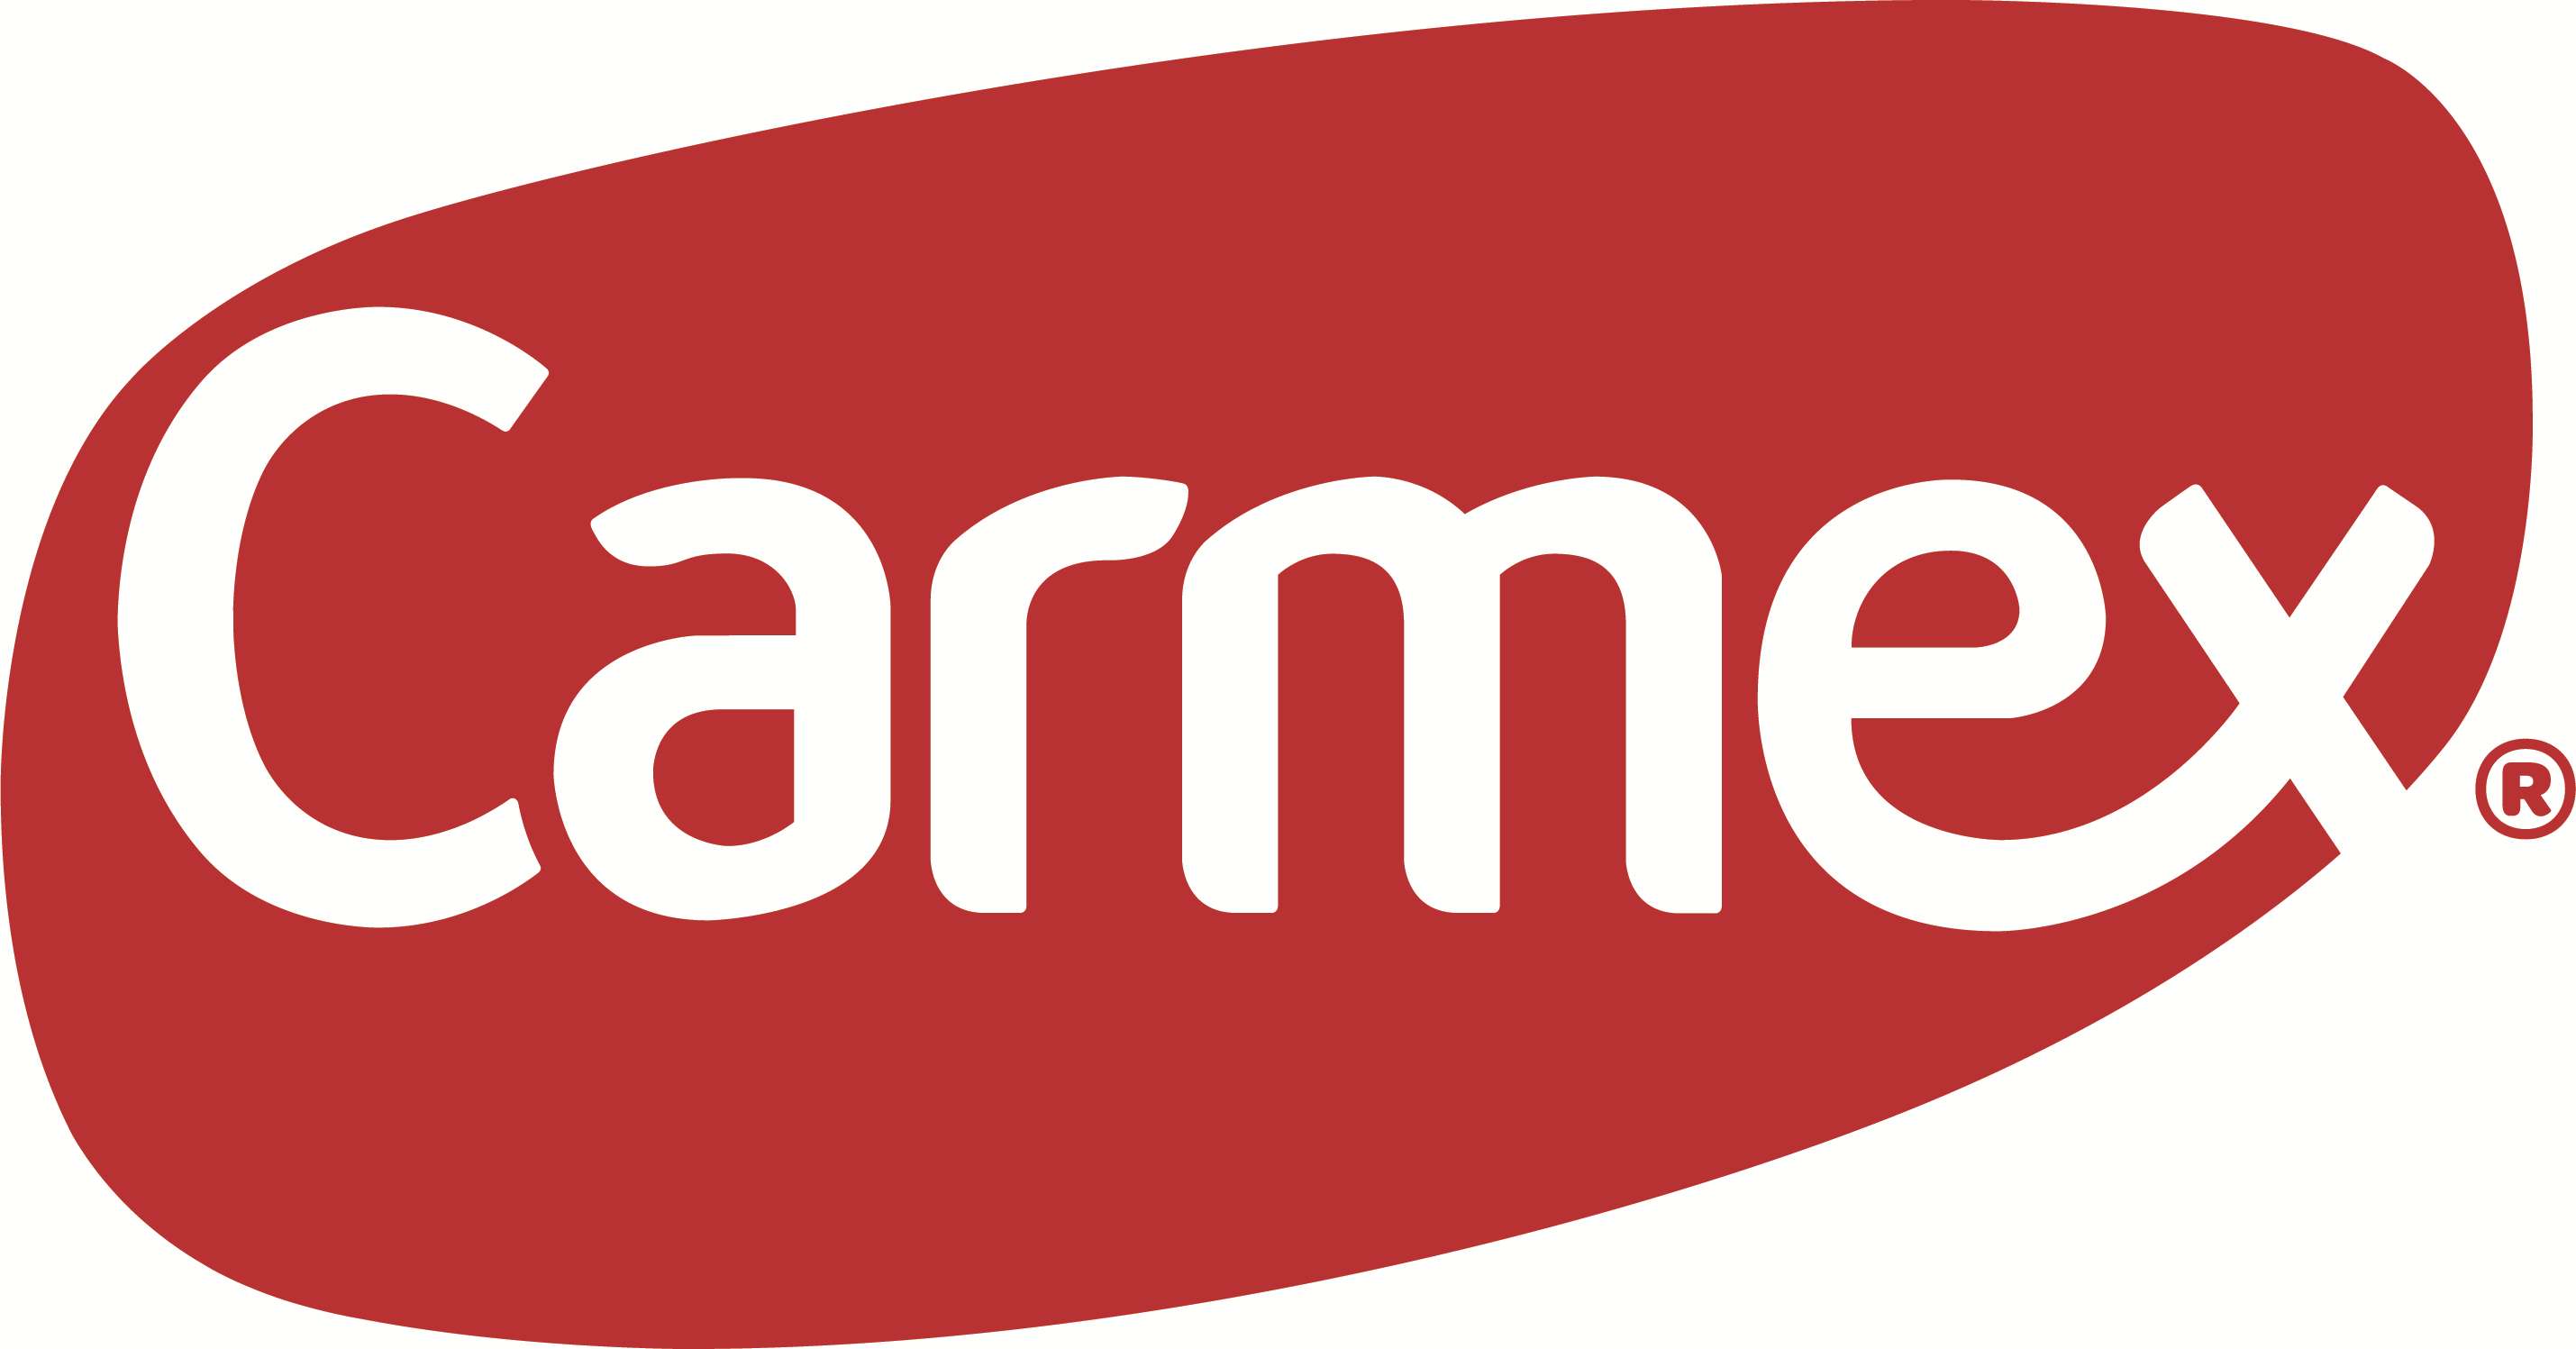 Carma Laboratories, Inc. Company Logo